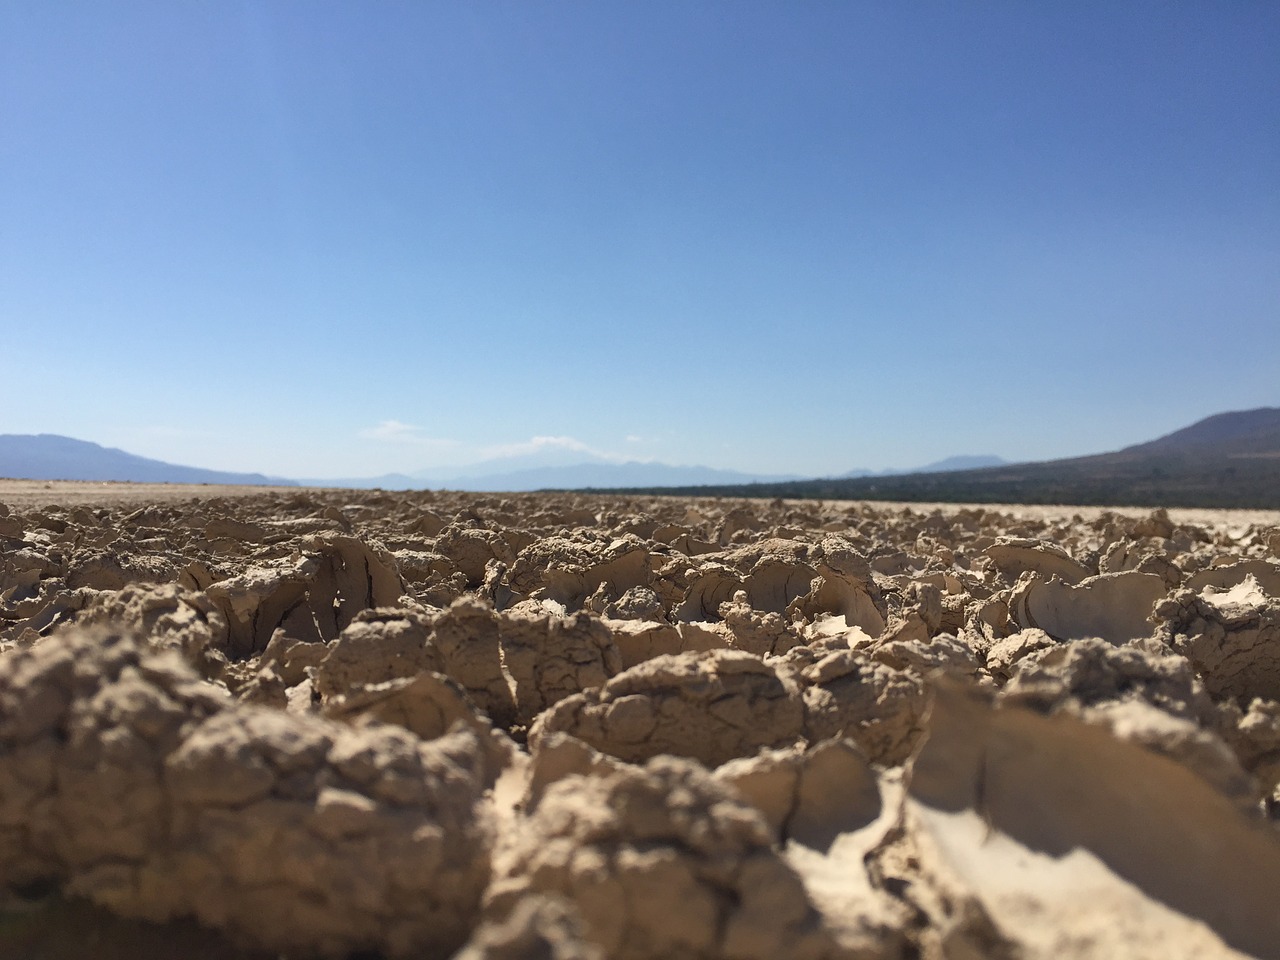 Drought Desert Landscape Wallpapers